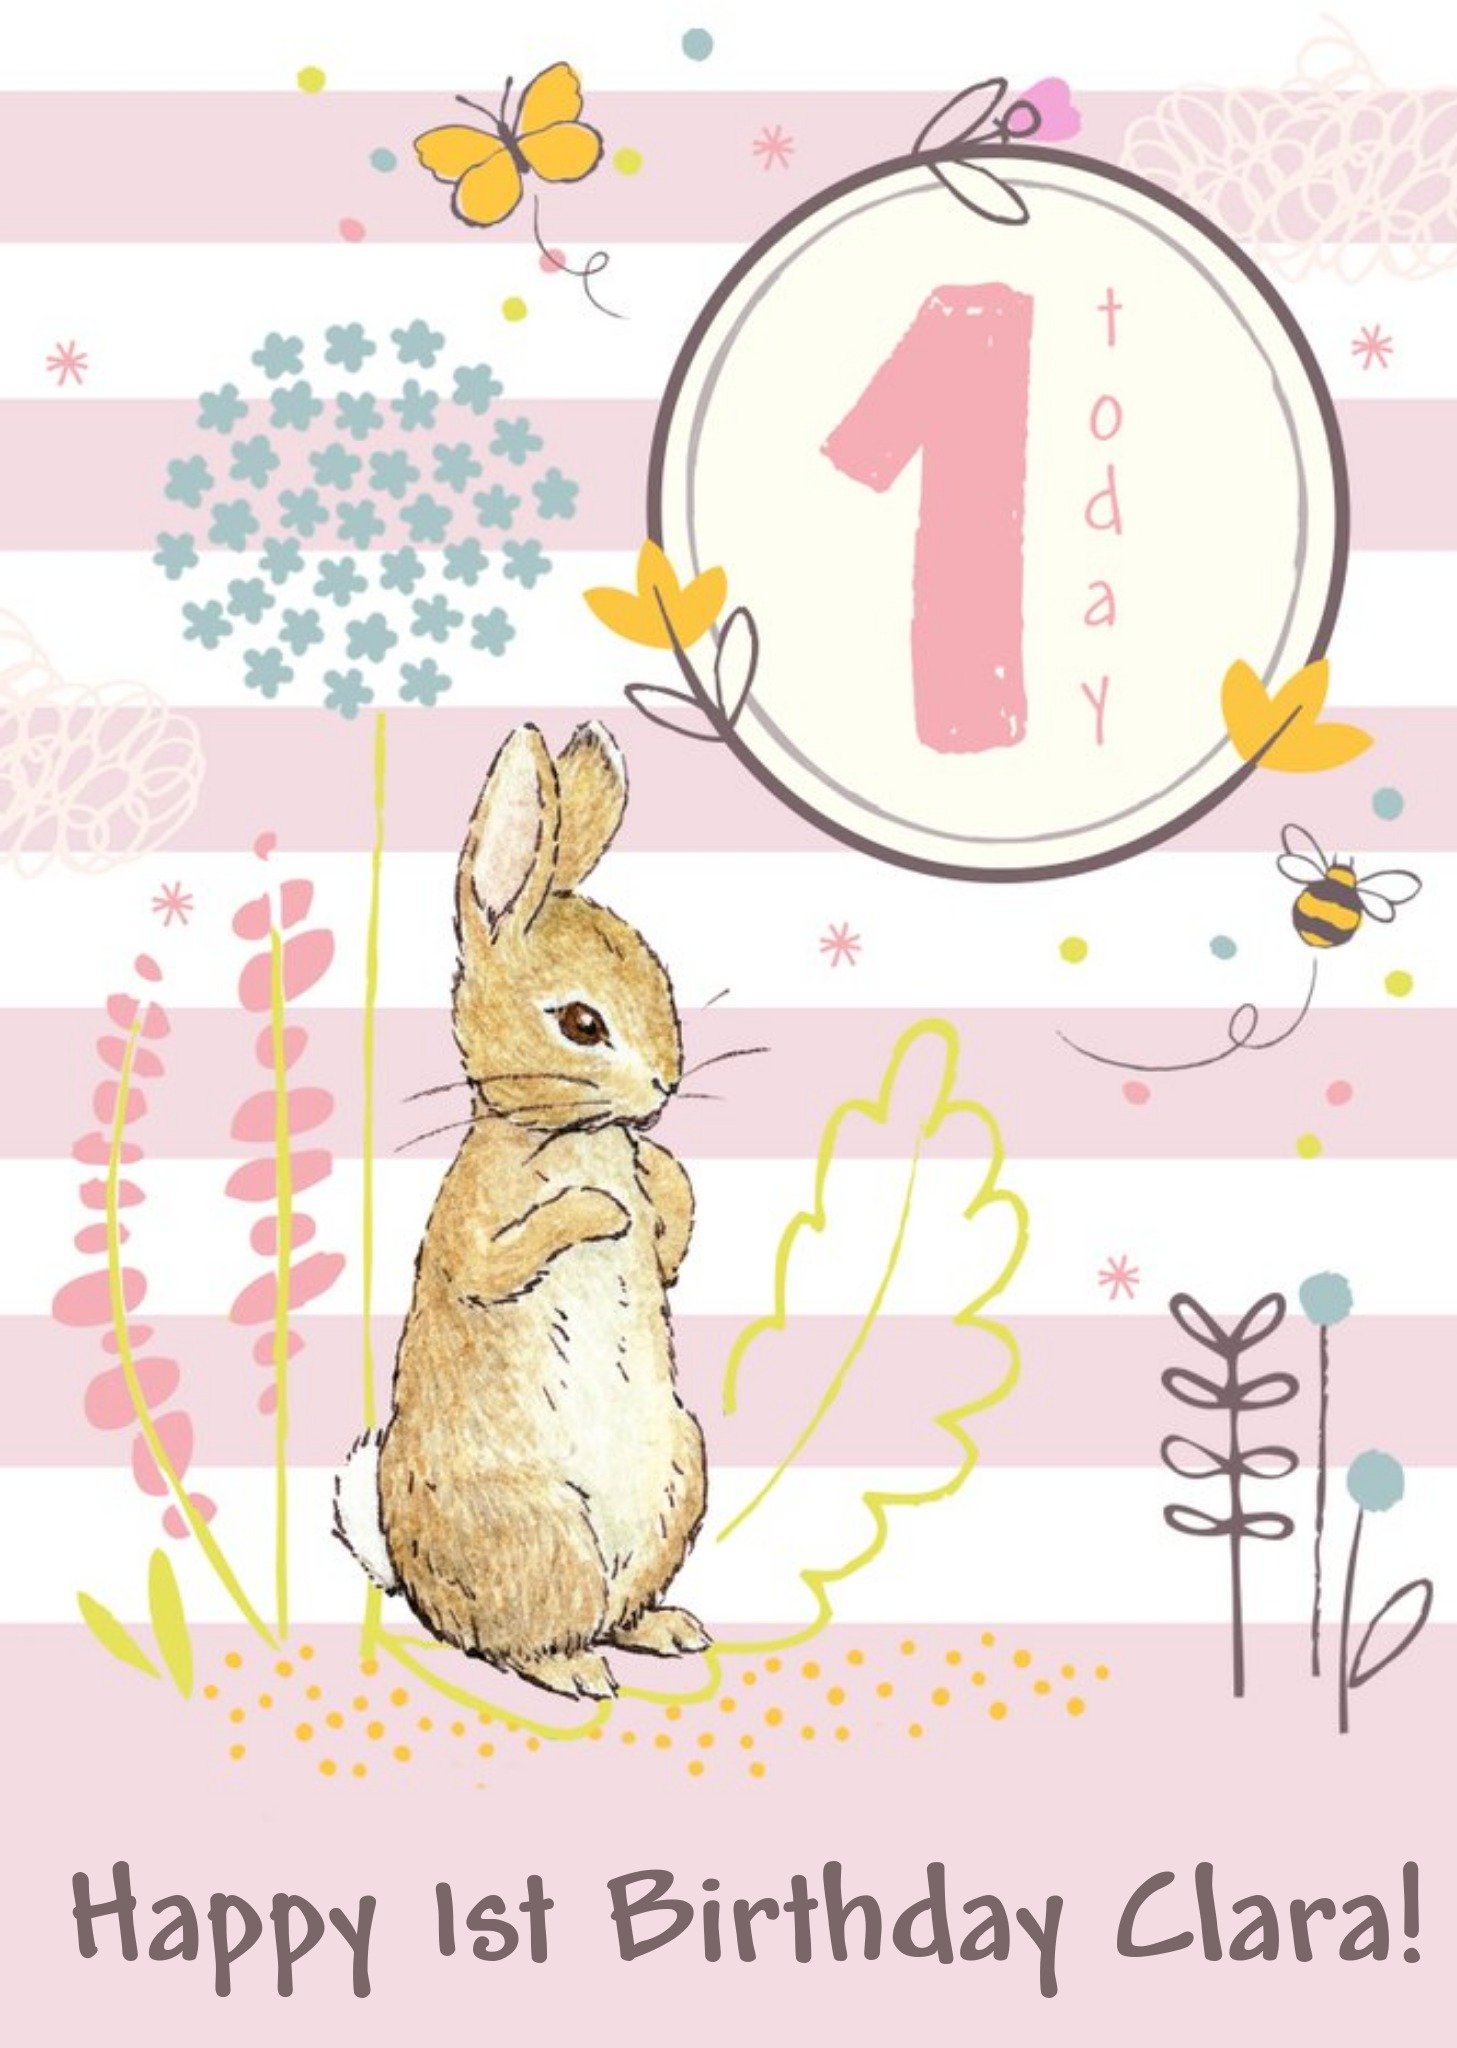 Peter Rabbit 1st Birthday Card Ecard